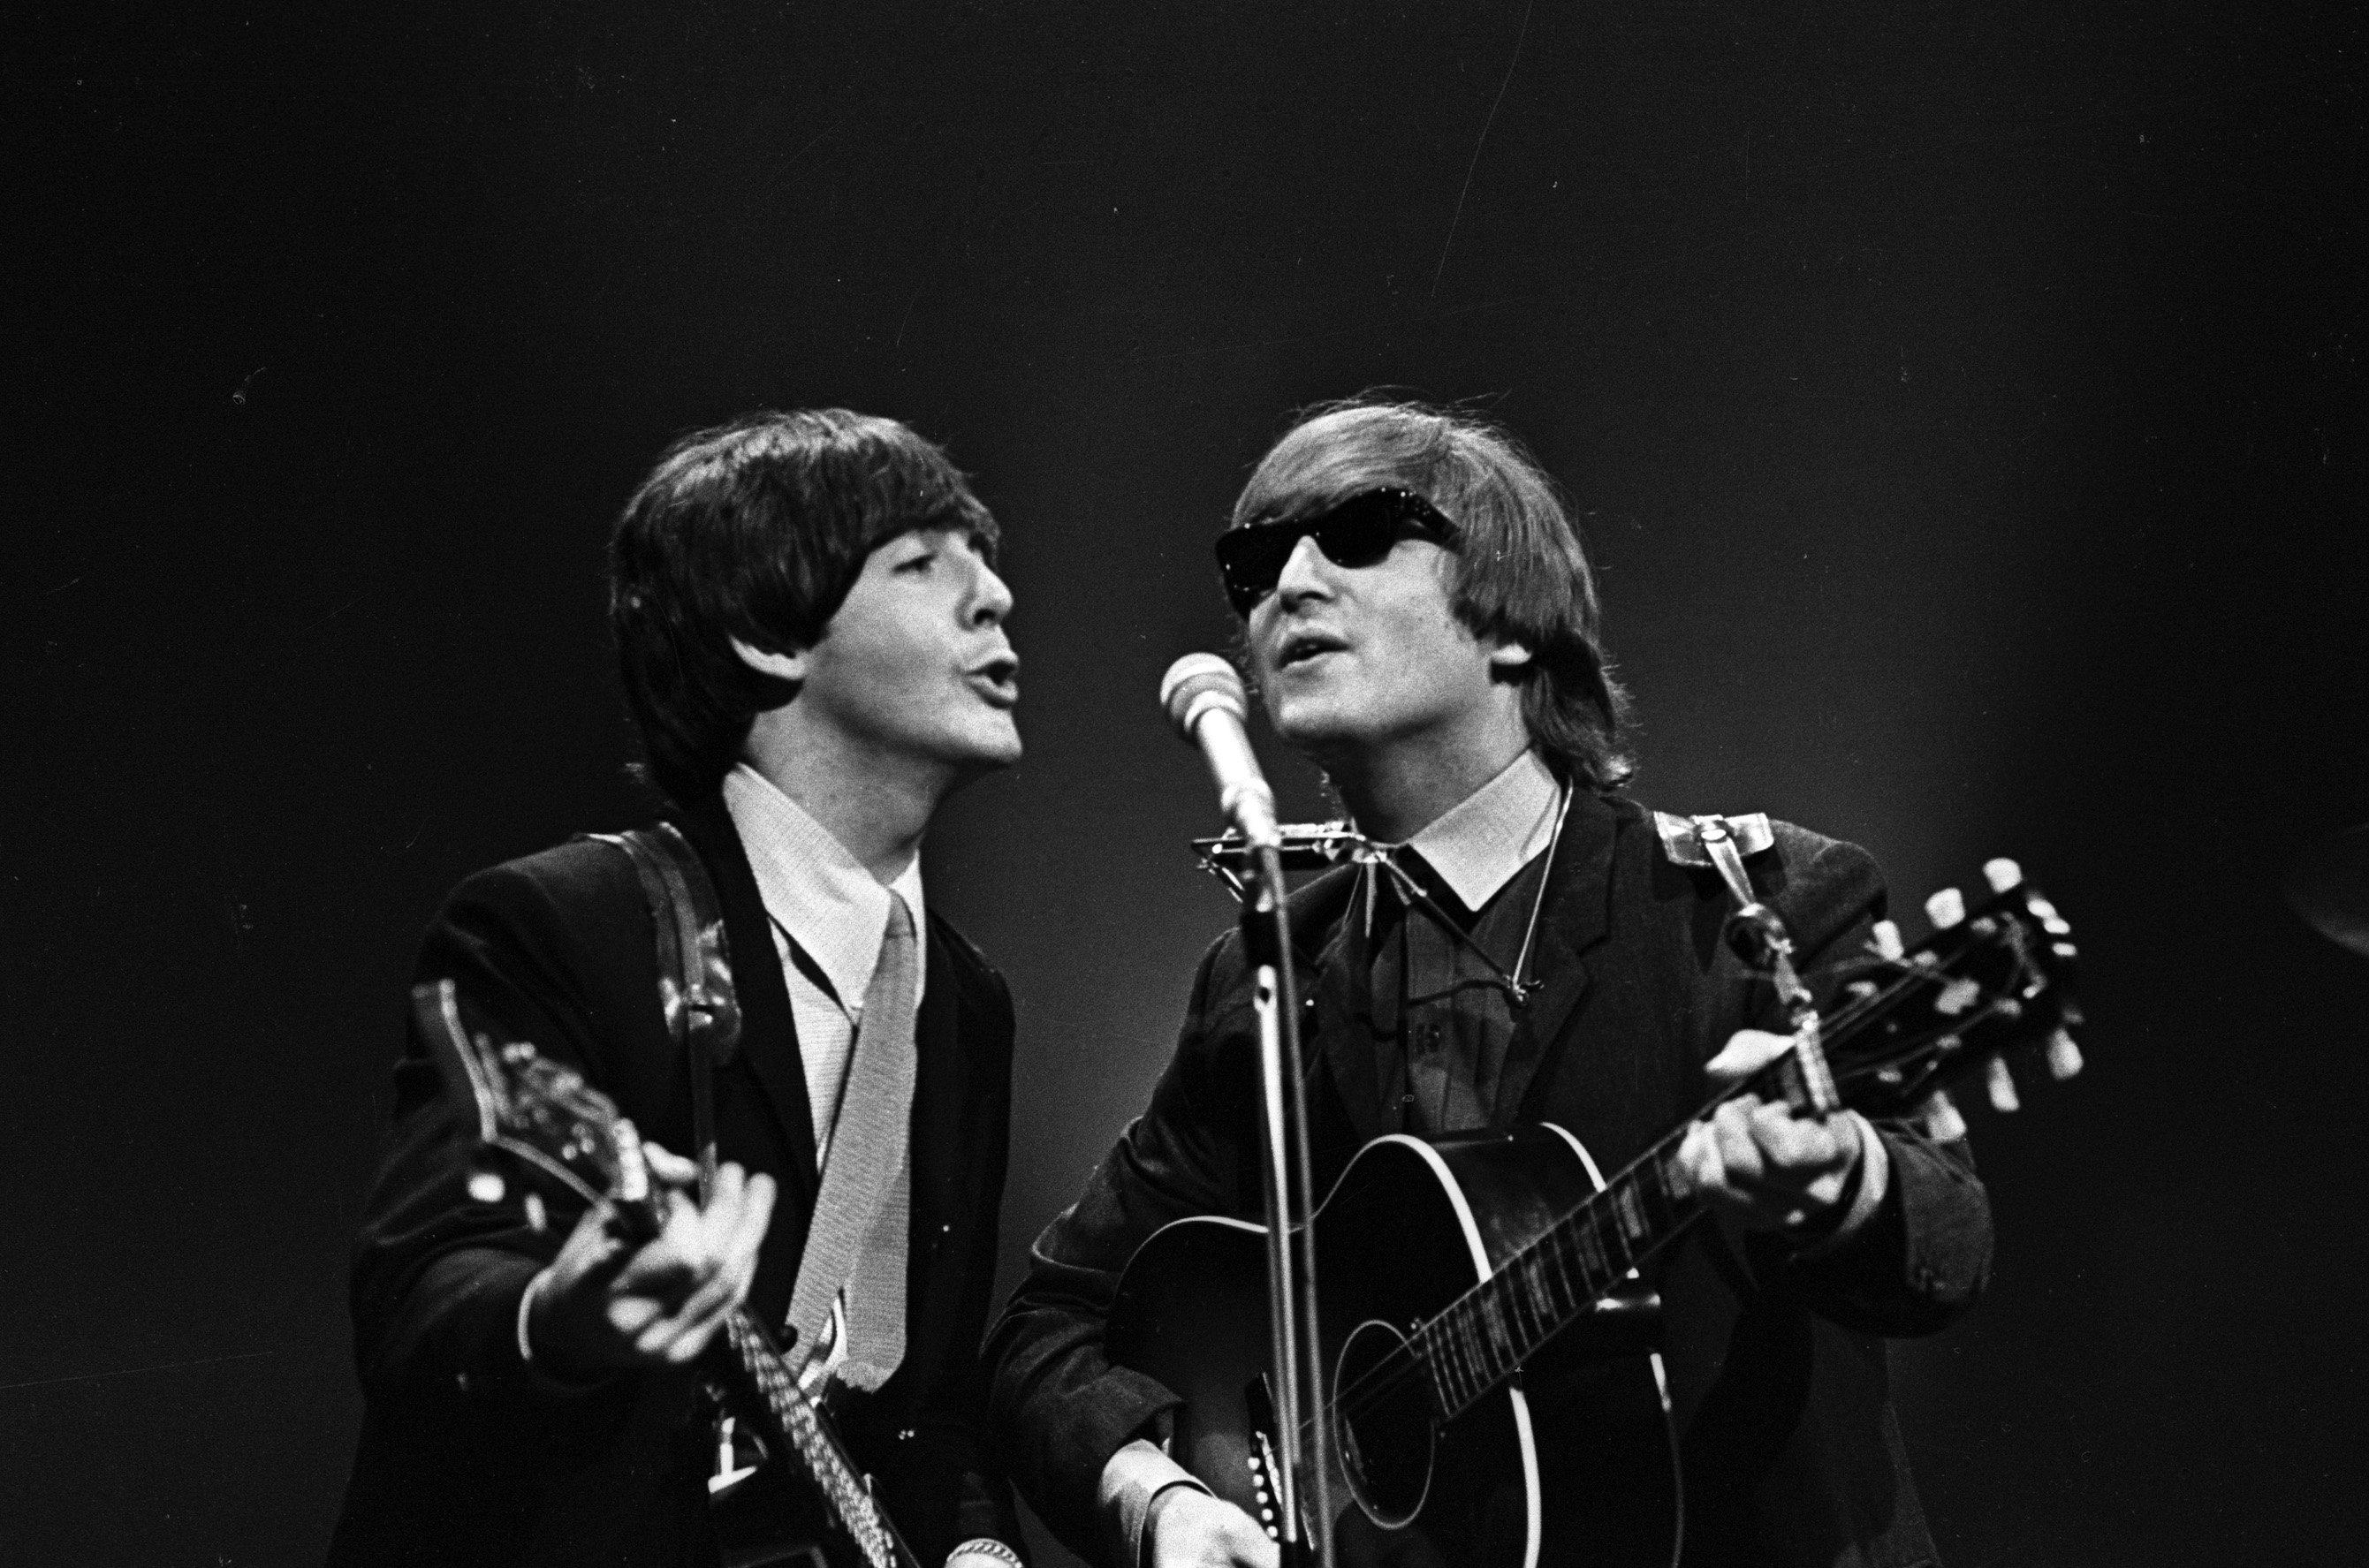 Paul McCartney and John Lennon of The Beatles perform